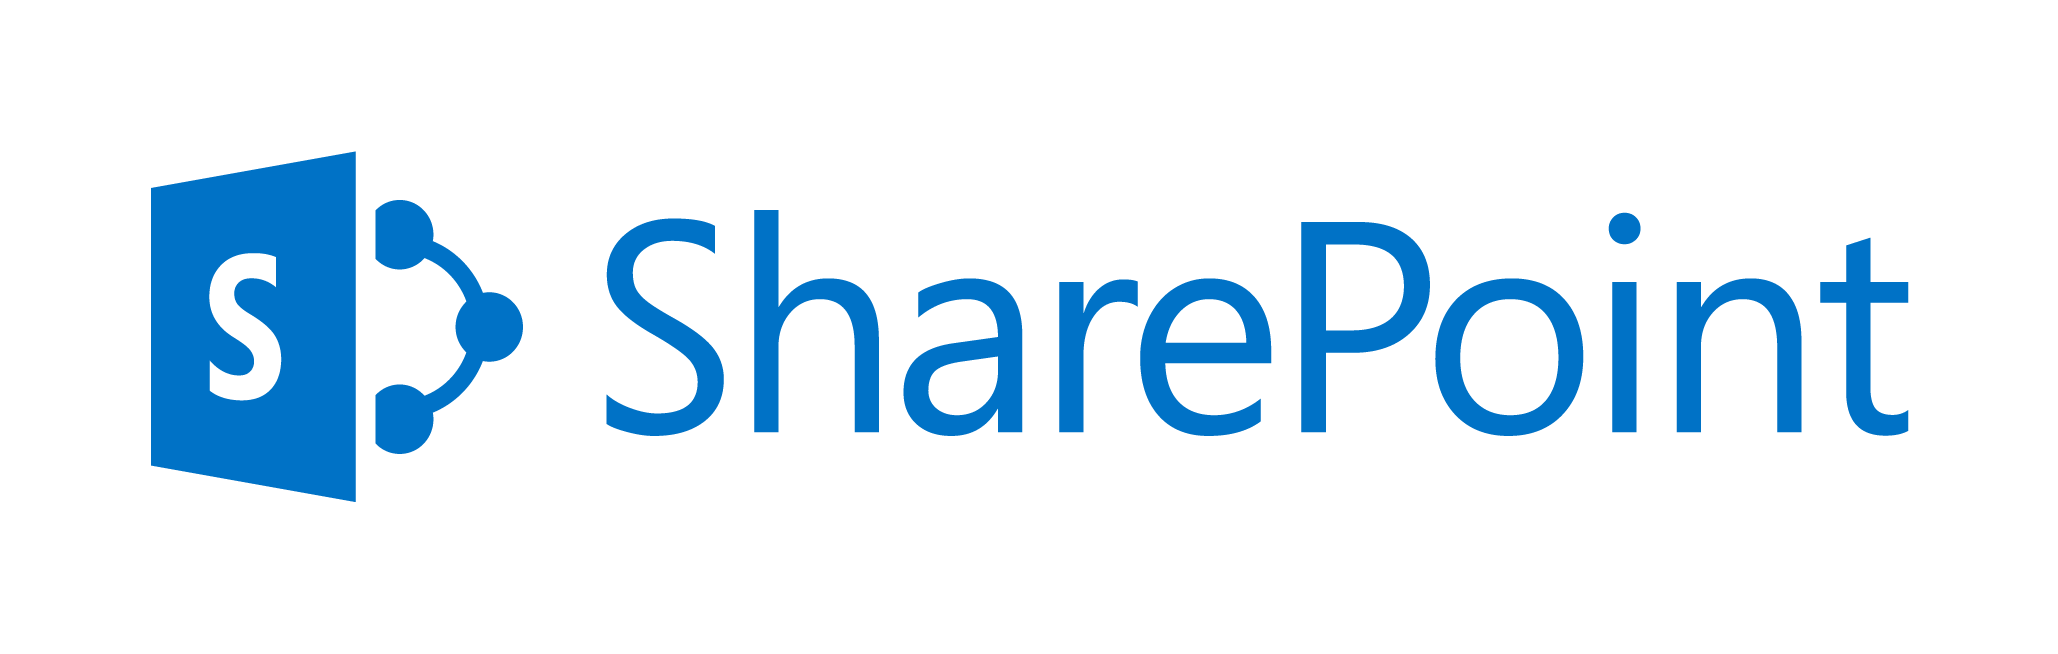 Sharepont-Logo1.png